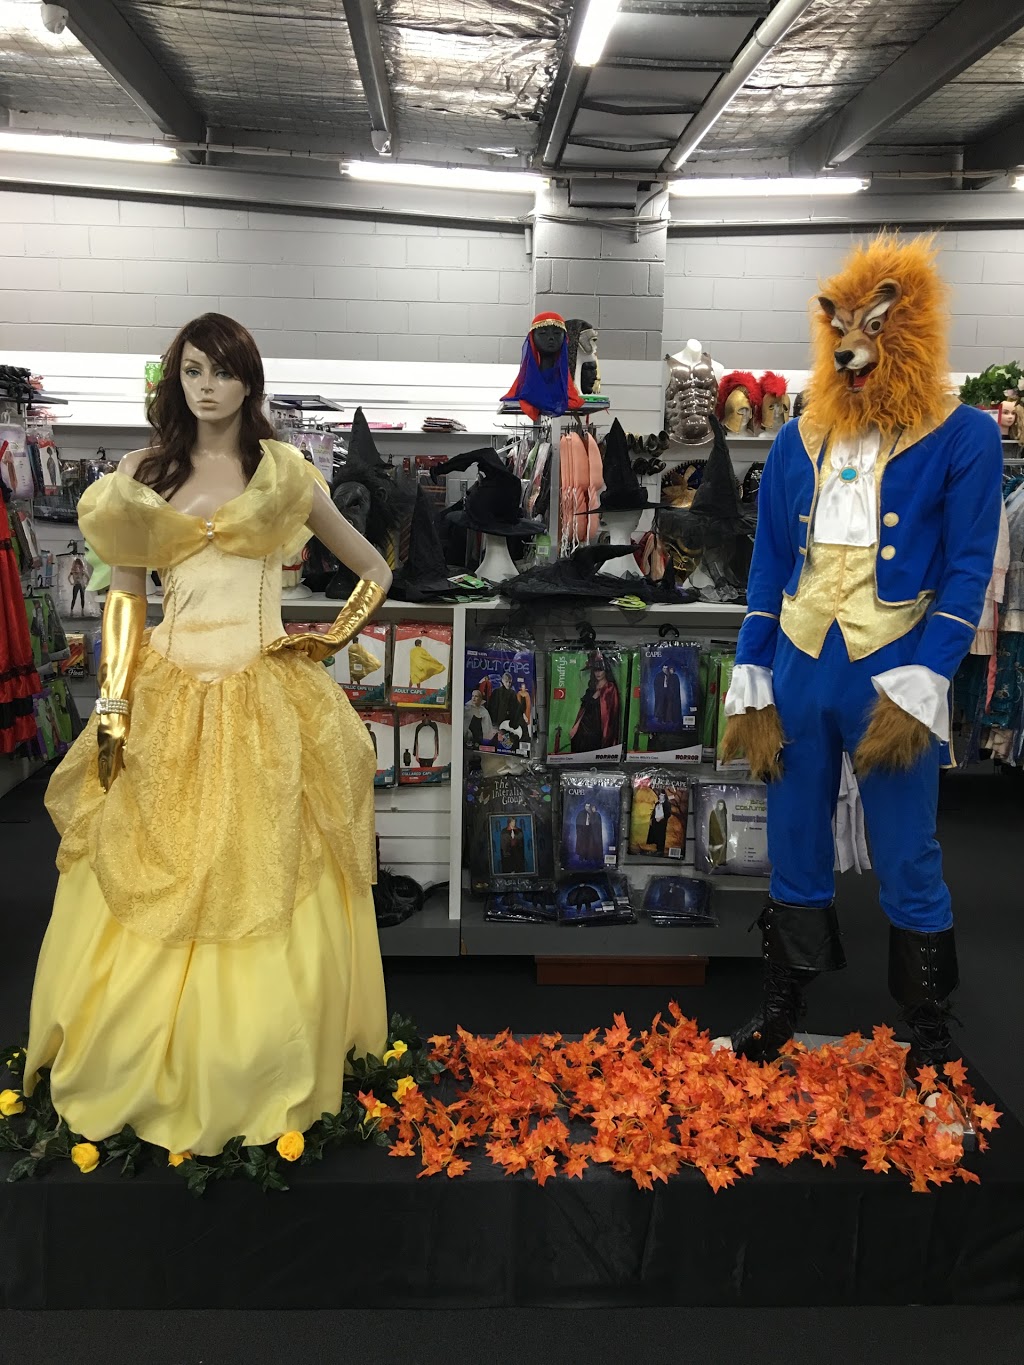 Costume Wonderland/Costume Bazaar | 911 Nepean Hwy, Bentleigh VIC 3204, Australia | Phone: (03) 9557 0222